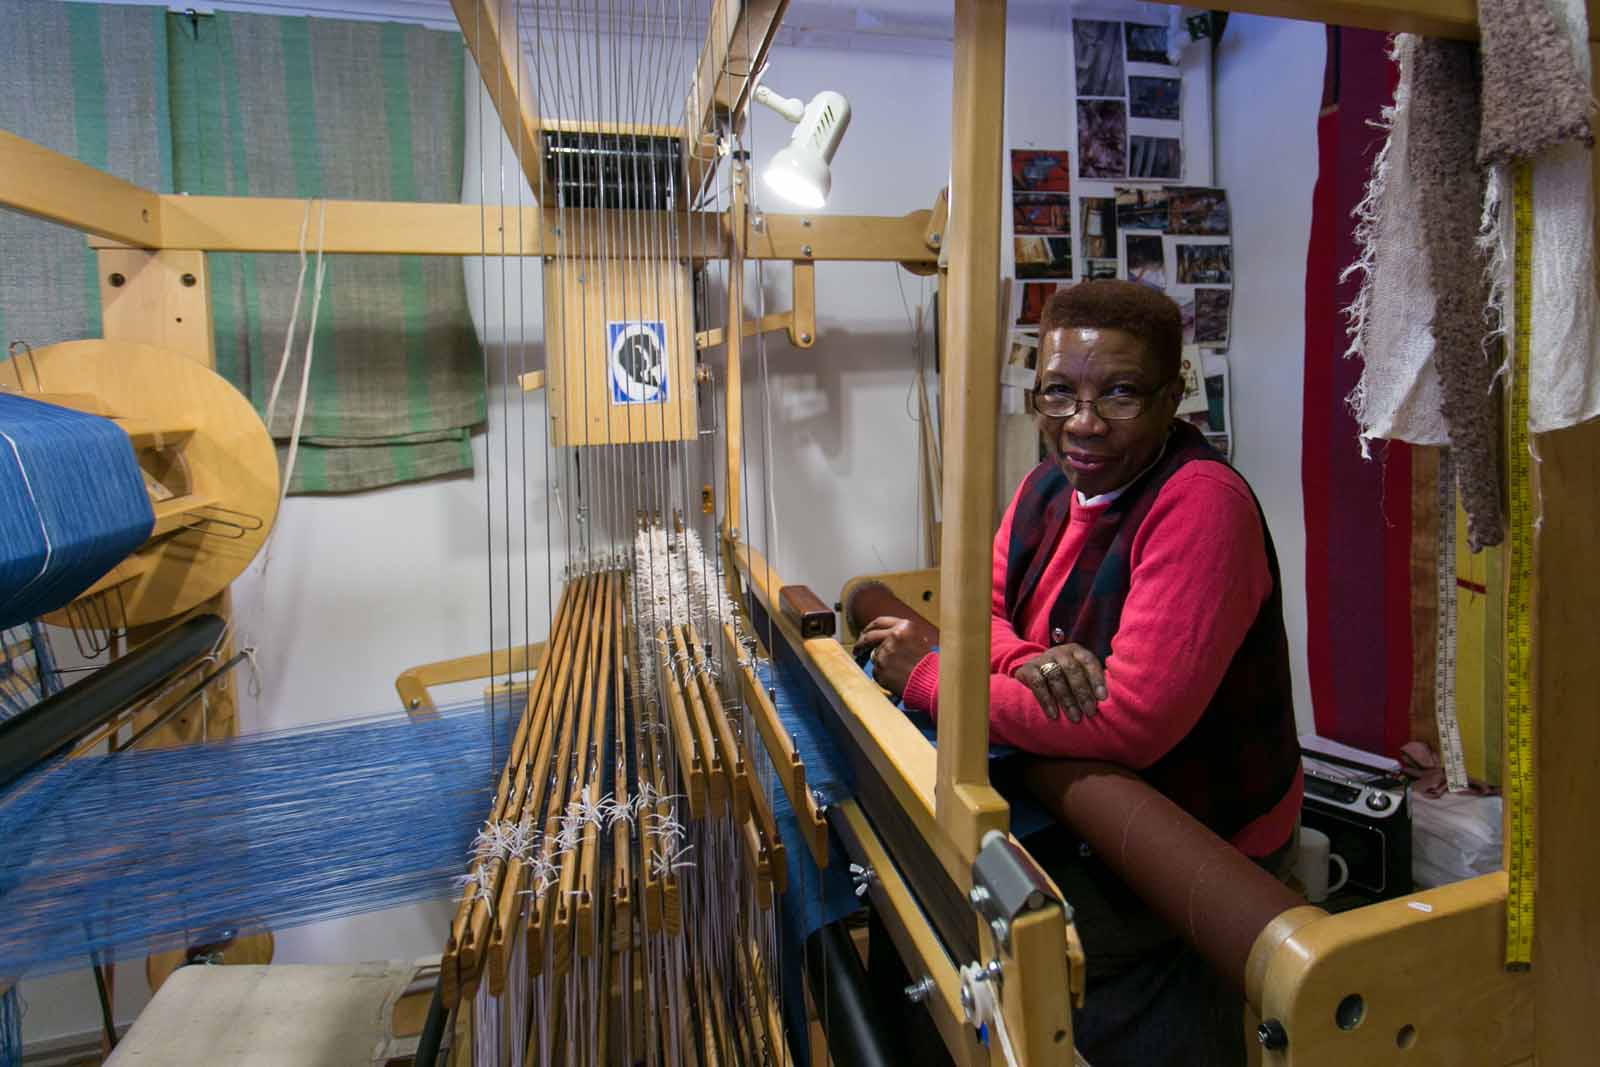 Textiles social enterprises shows its wares